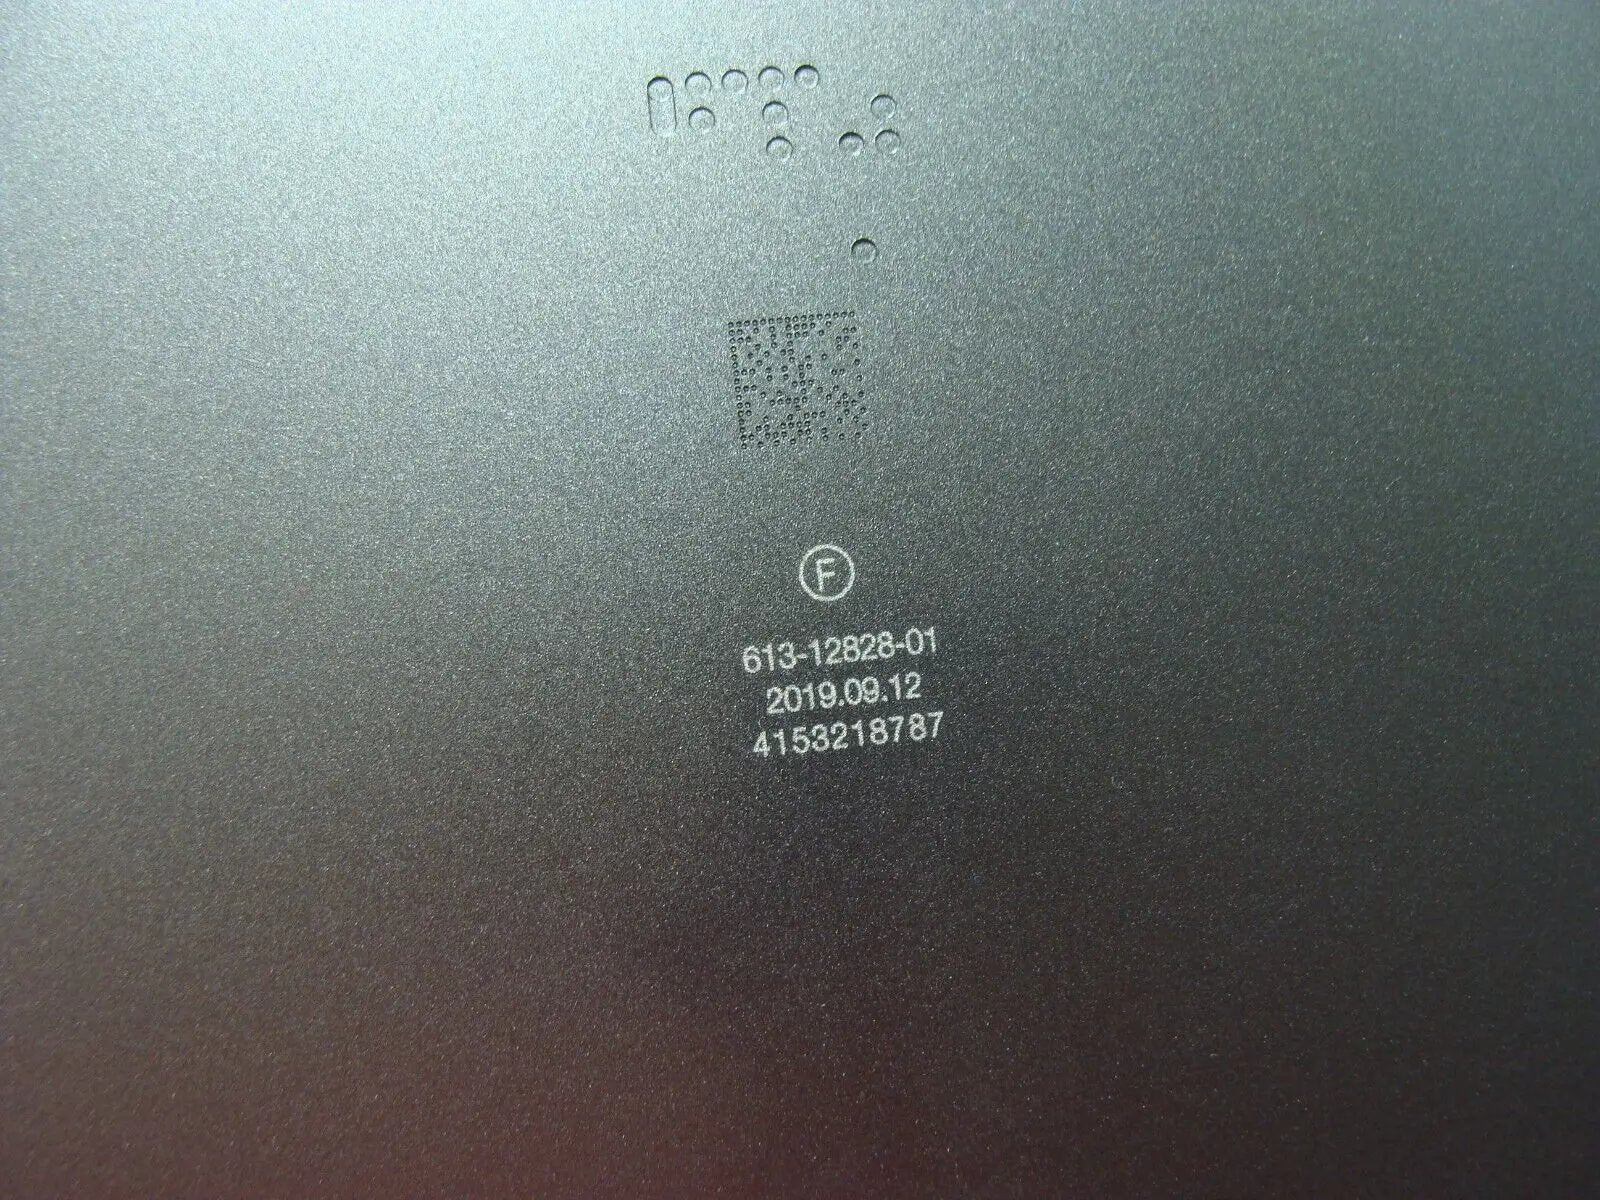 MacBook Pro 16” A2141 2019 MVVJ2LL/A MVVK2LL/A Bottom Case Space Gray 923-03844